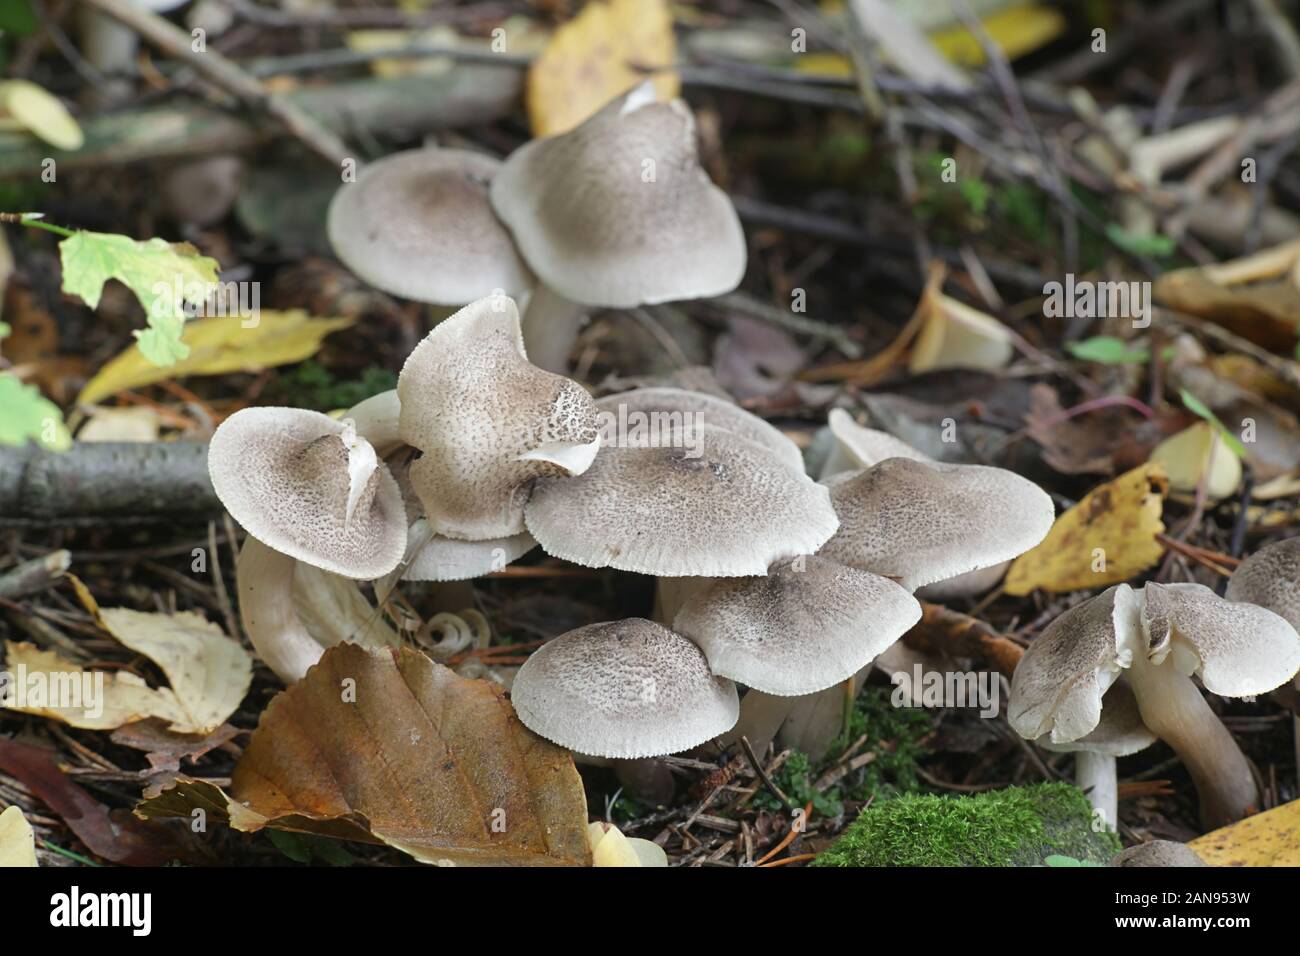 Tricholoma scalpturatum, known as the Yellowing Knight mushroom, wild mushrooms from Finland Stock Photo